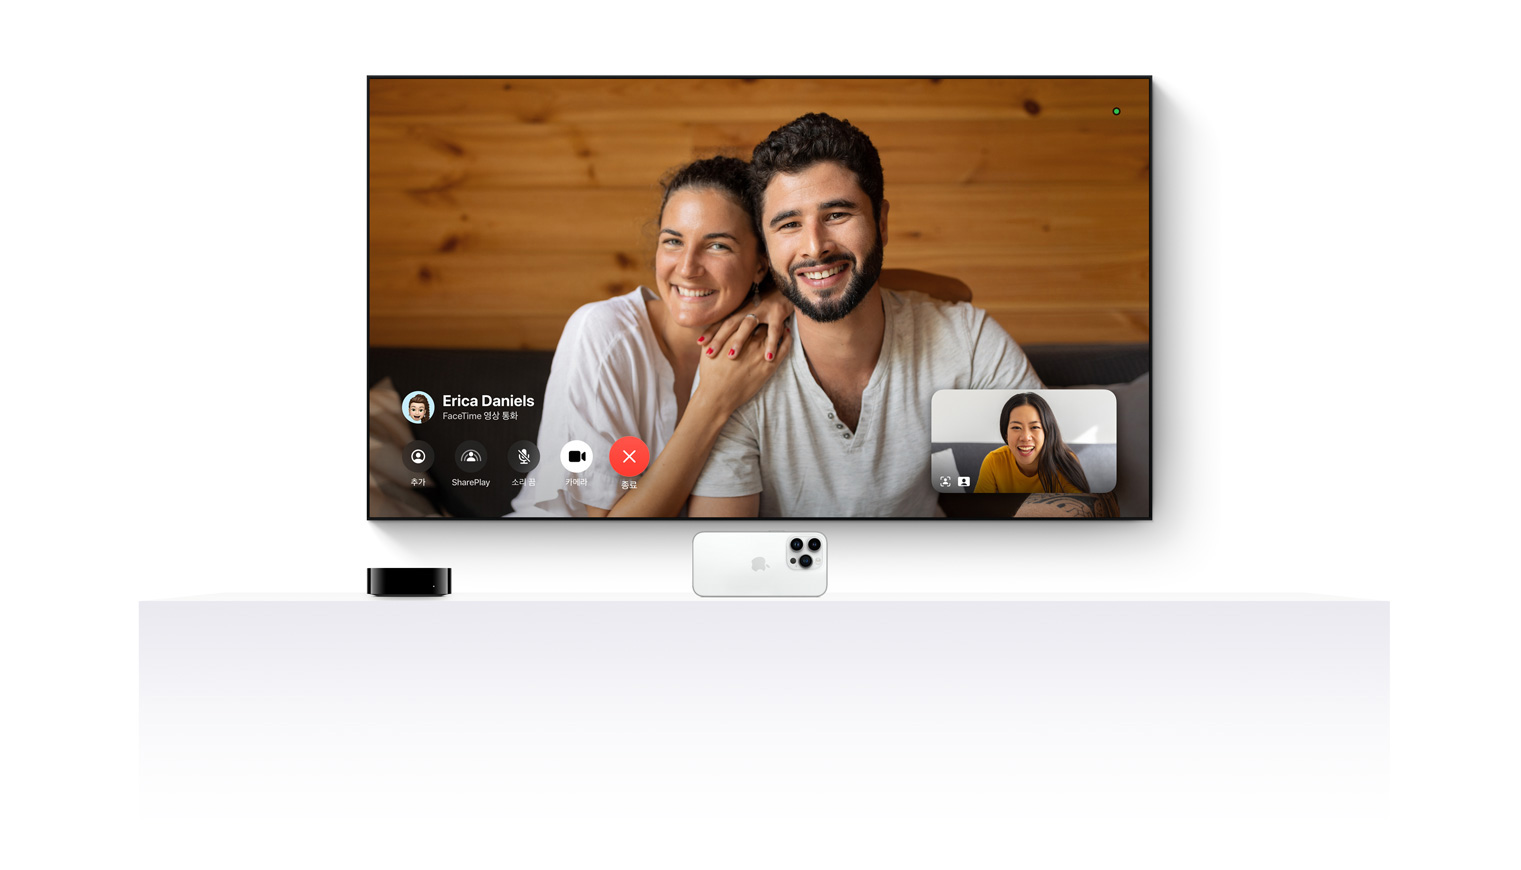 Apple TV 4K와 iPhone을 연결해 평면 TV에서 FaceTime 통화를 하는 모습을 보여주는 이미지